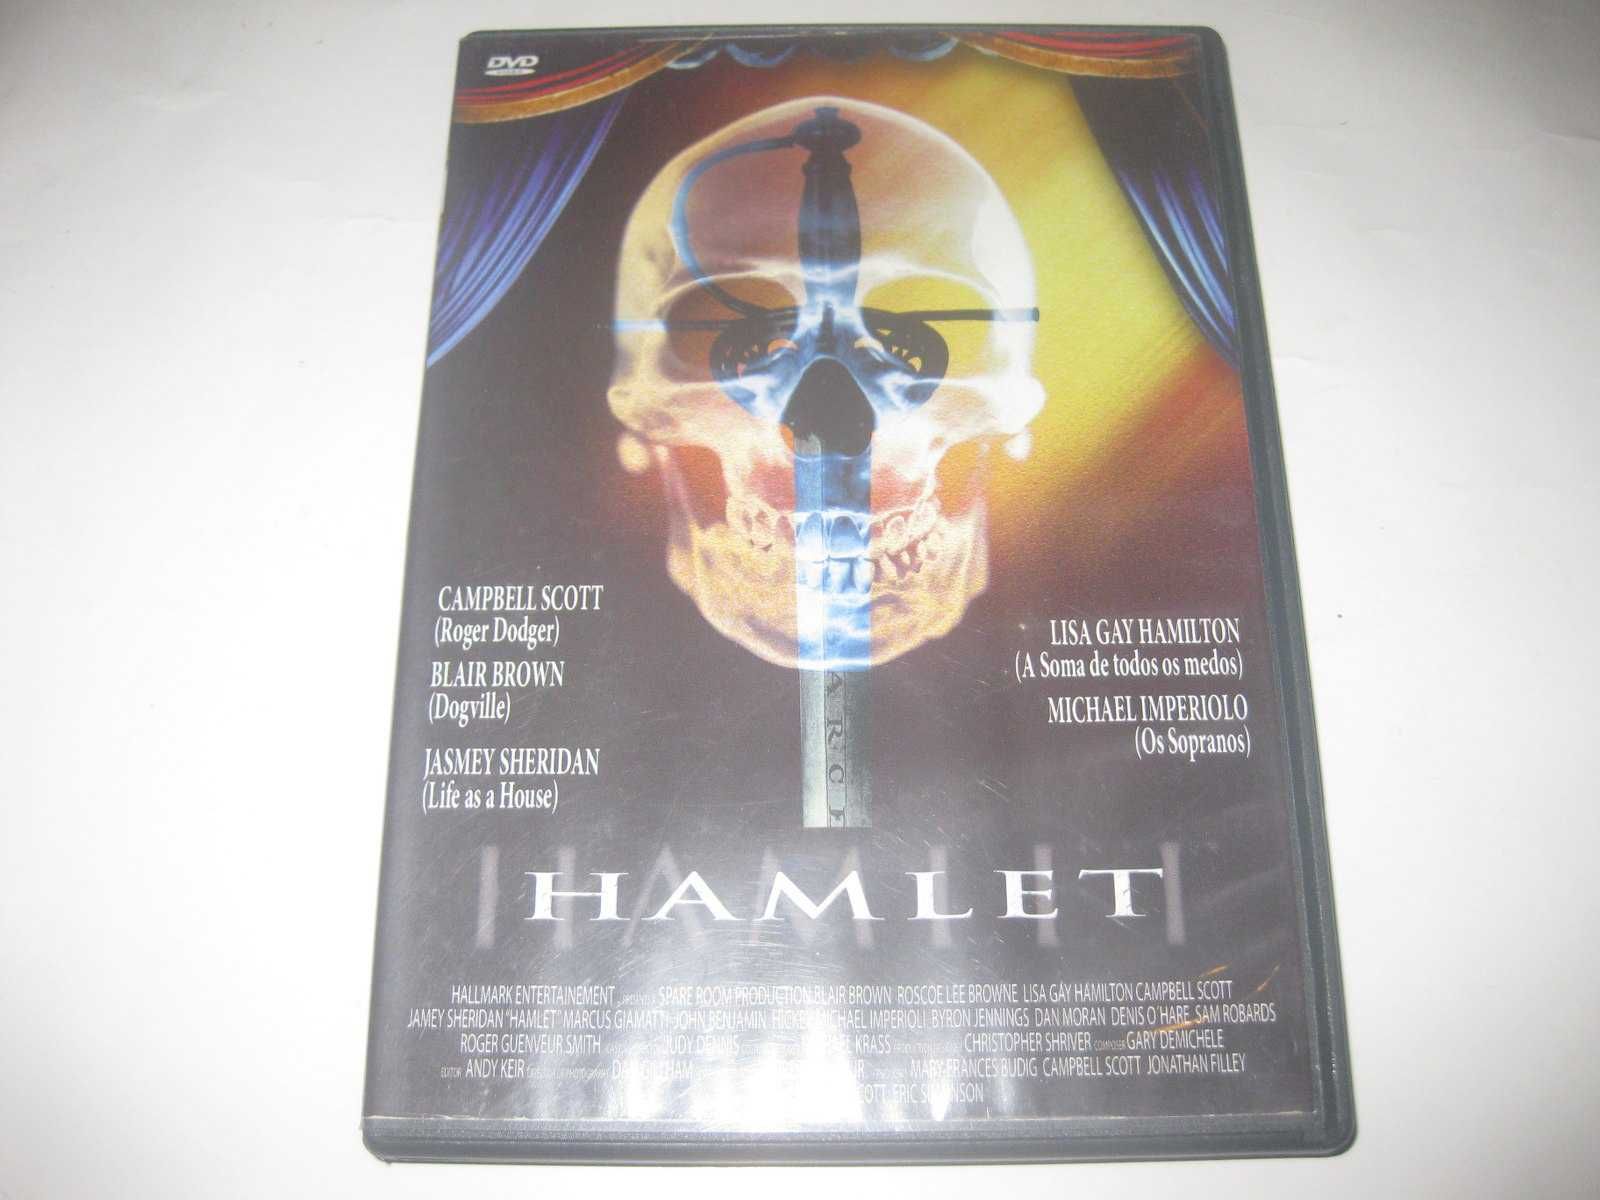 DVD "Hamlet" de Campbell Scott